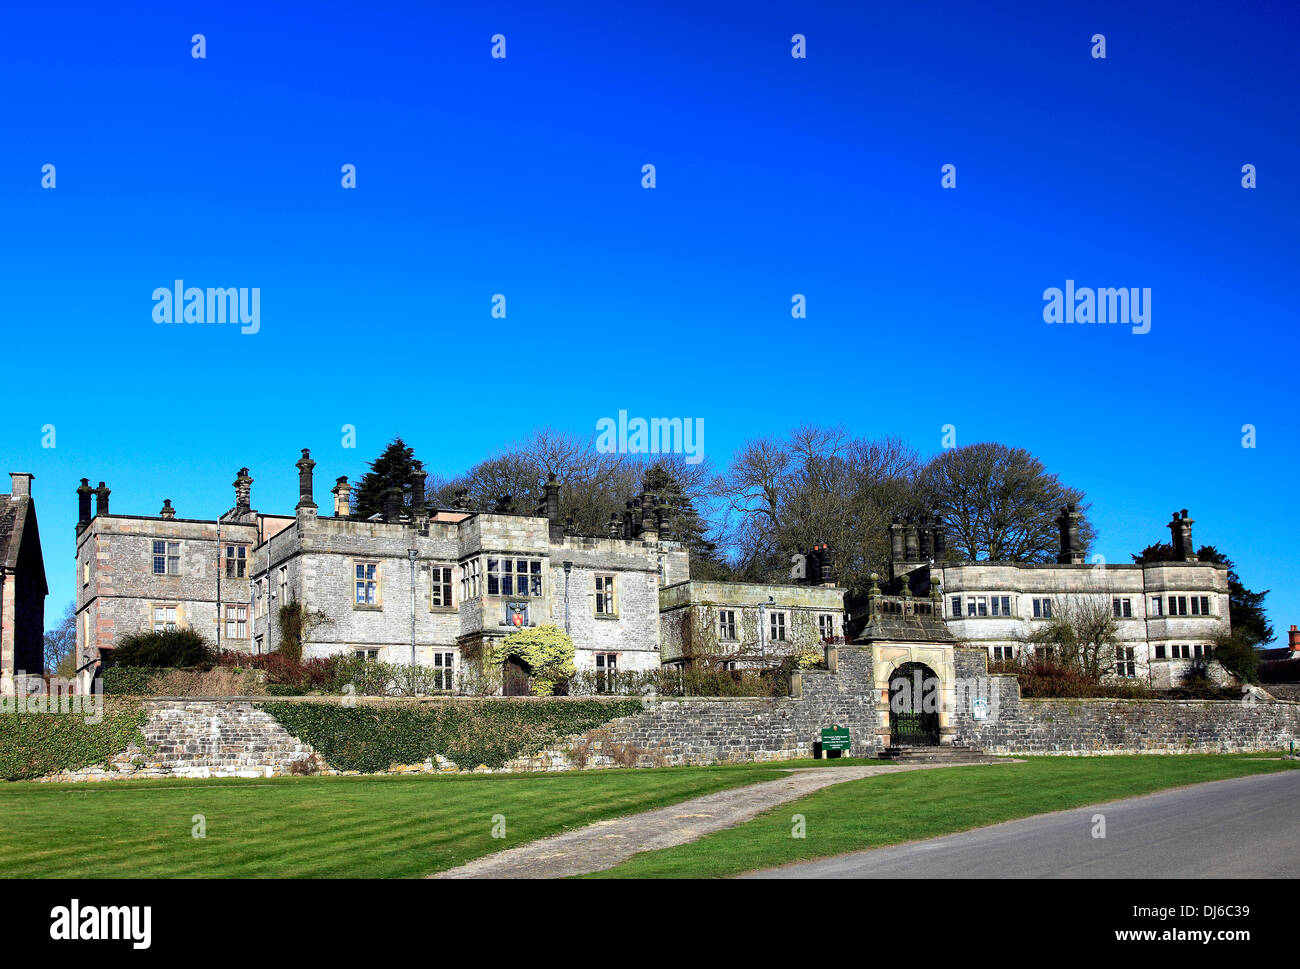 Tissington Hall Jacobean Manor House, Fitzherbert family, Tissington village, Peak District National Park, Derbyshire, England Stock Photo